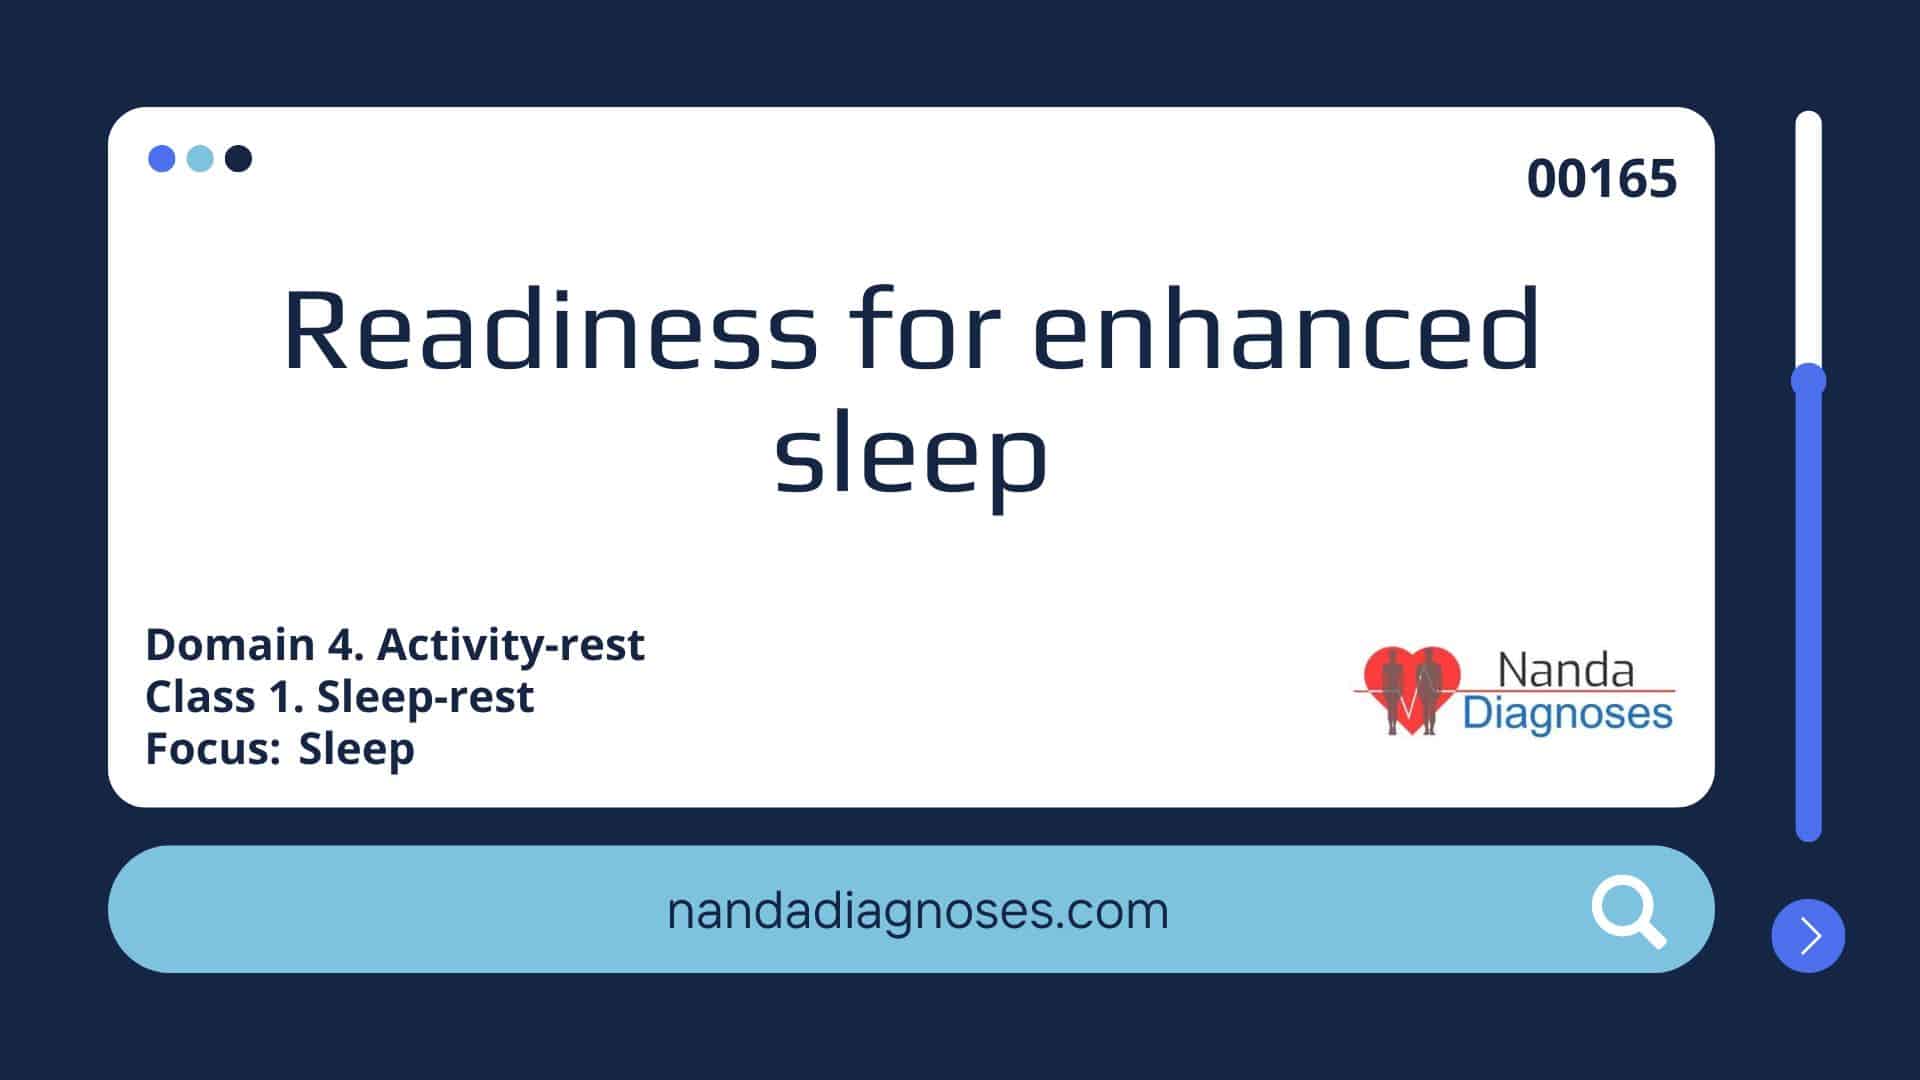 Nursing diagnosis Readiness for enhanced sleep